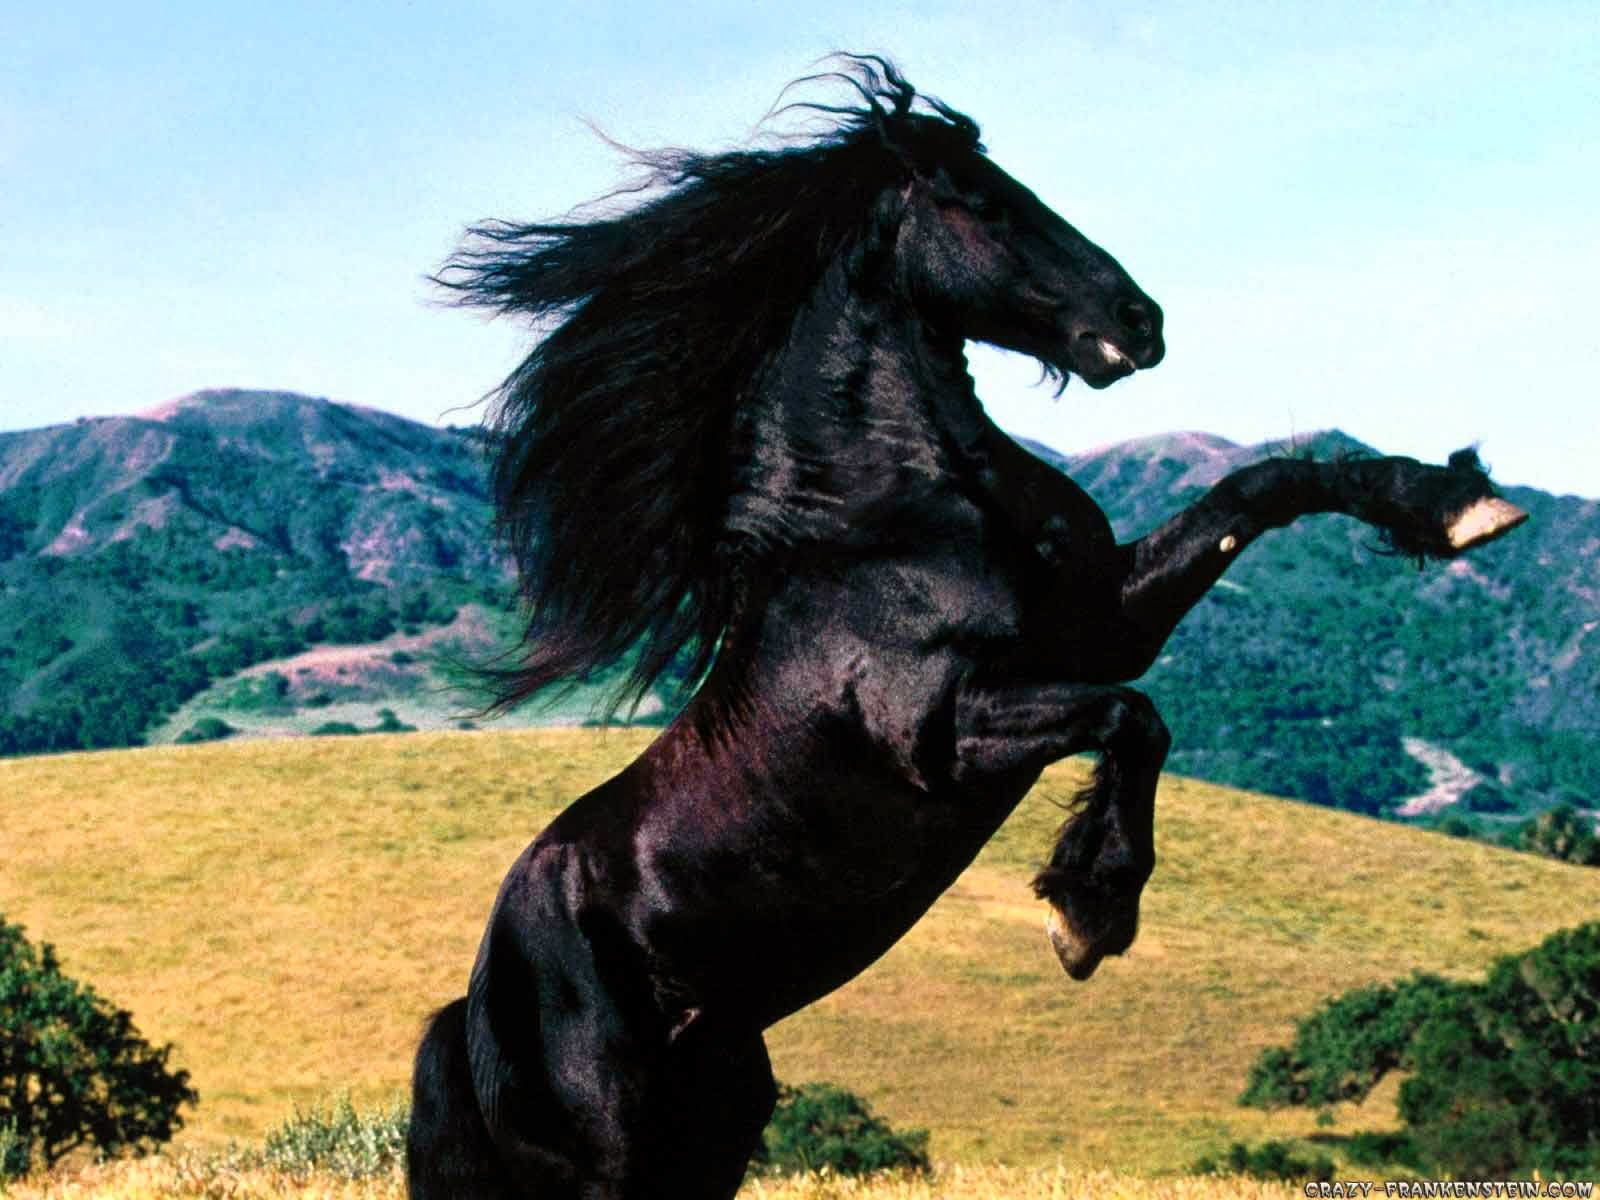 HD Wallpaper Desktop Horse